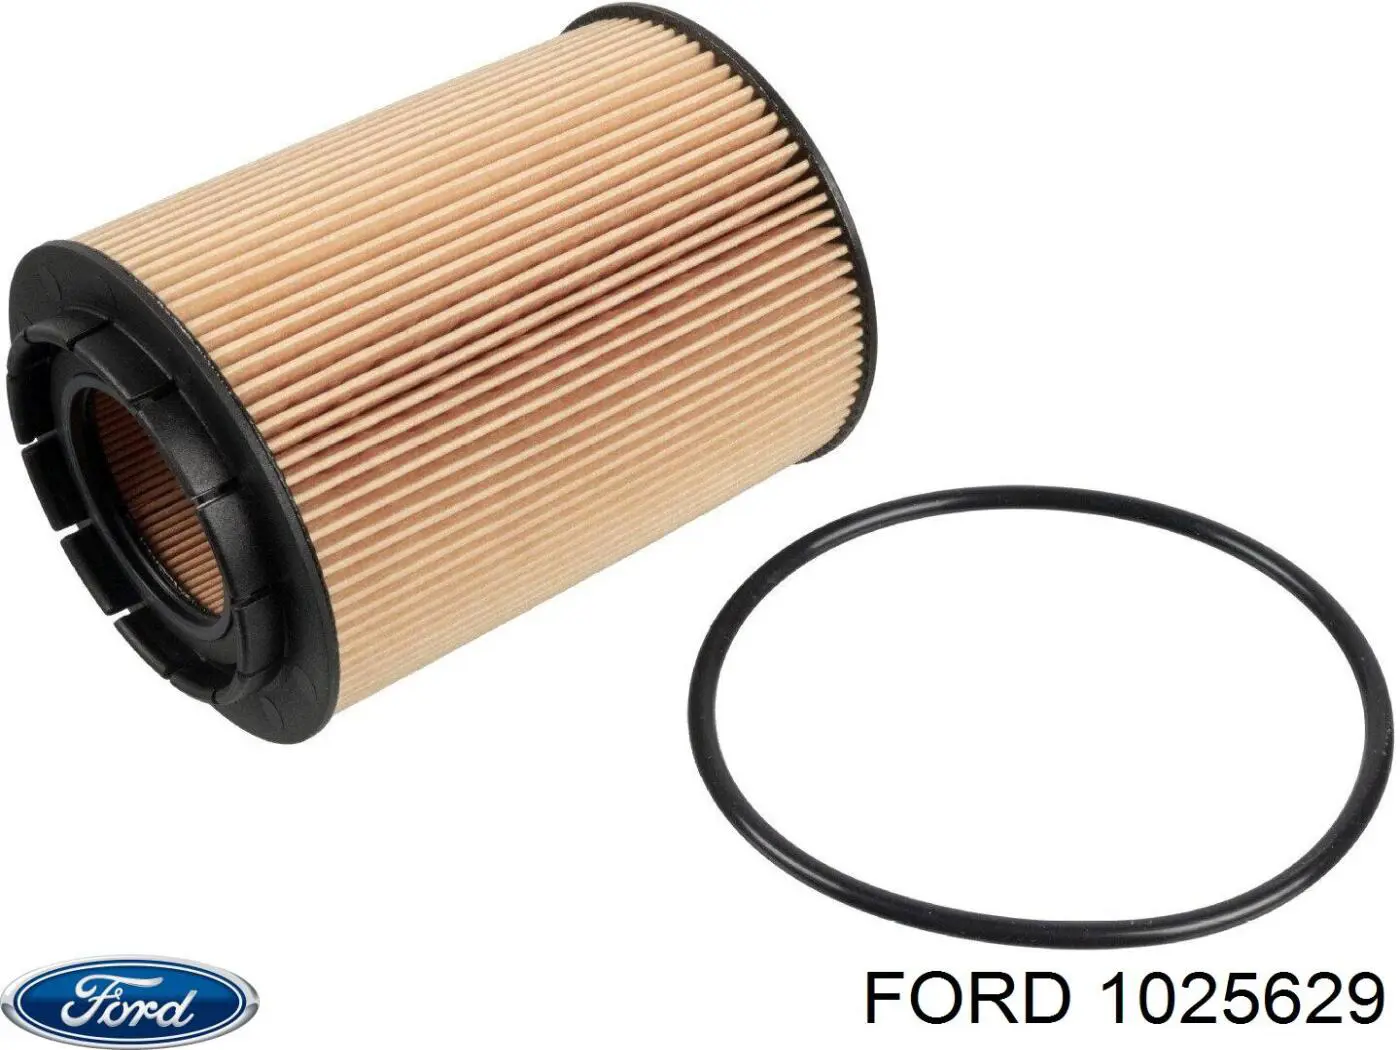 1025629 Ford filtro de aceite